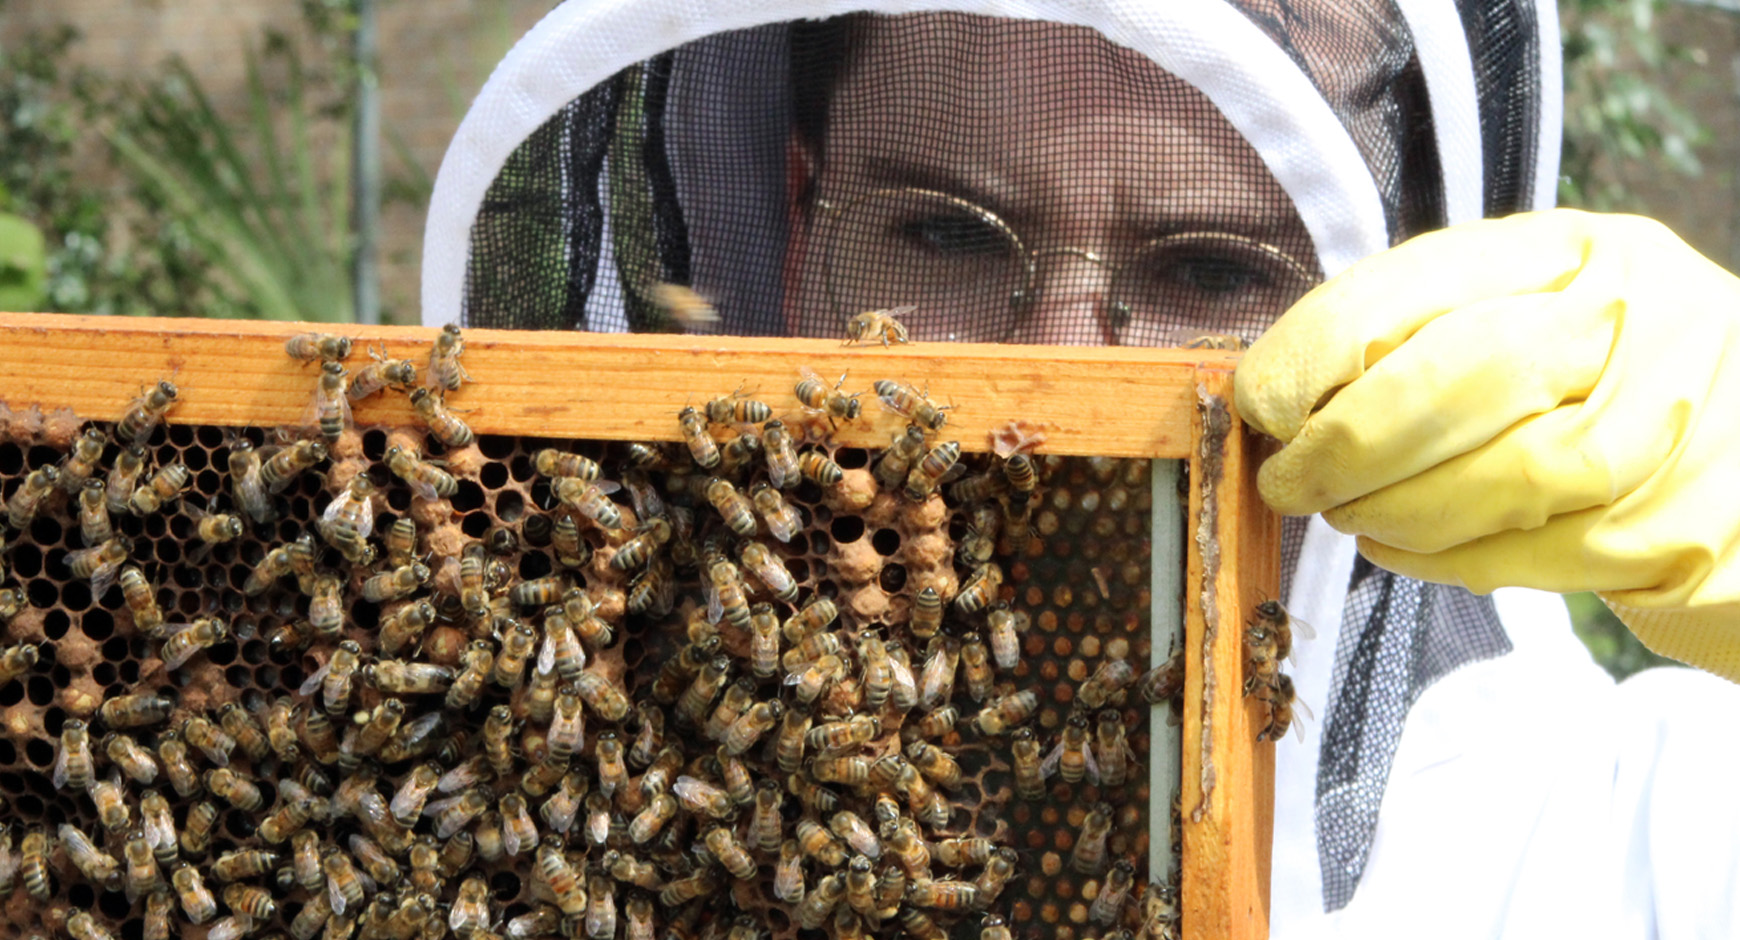 Beevo Beekeeping Society, University of Texas at Austin